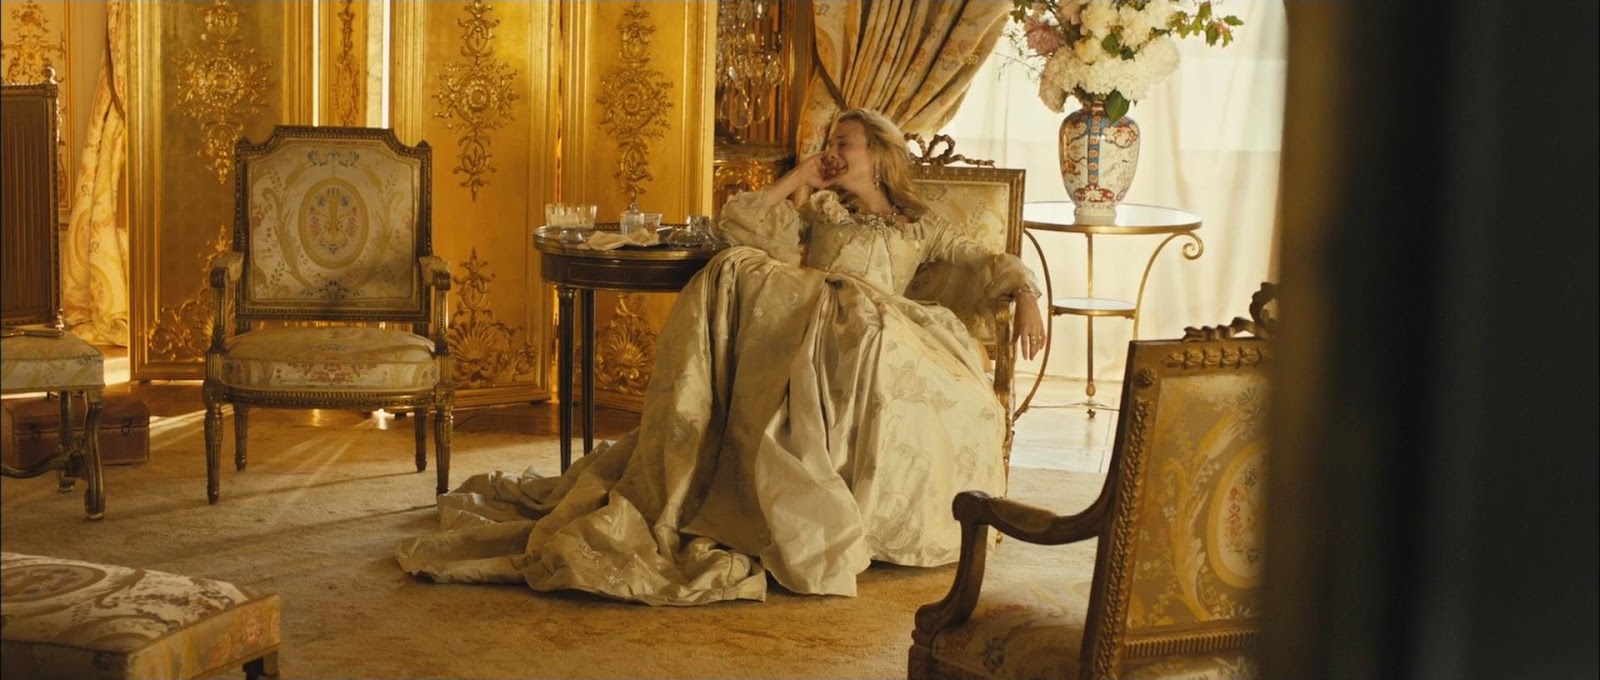 Farewell, My Queen Official Trailer #1 (2012) - Lea Seydoux, Diane Kruger  Movie HD 